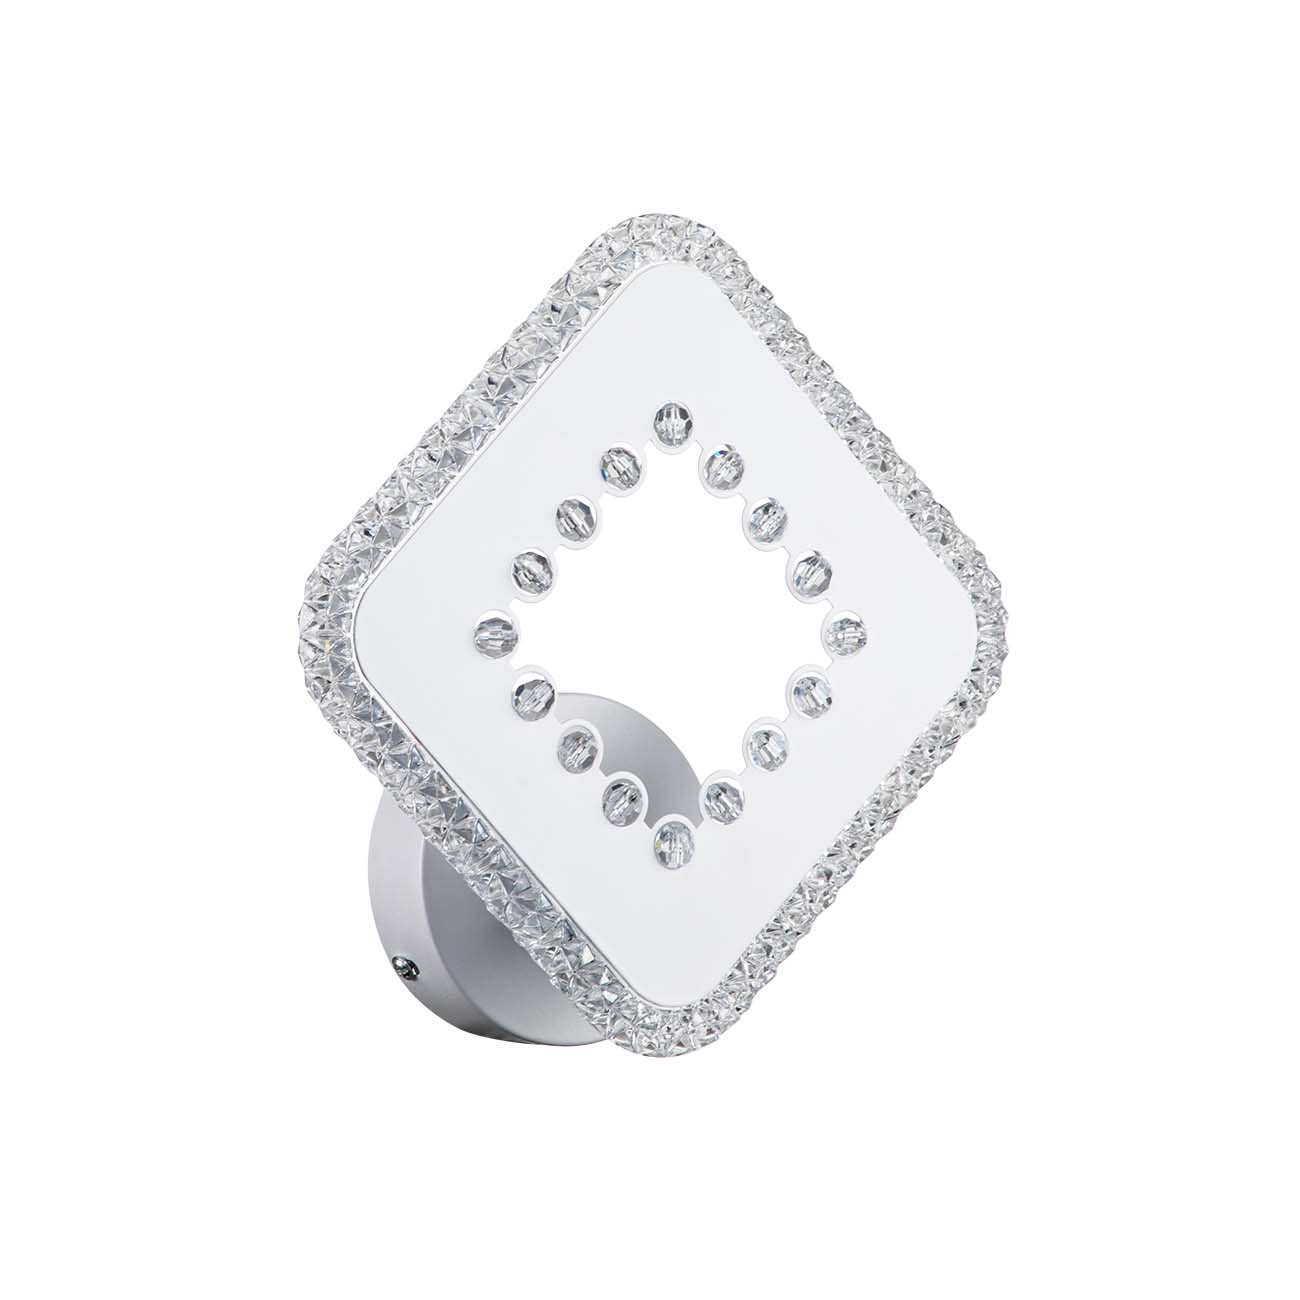 Настенный светильник Escada 10231/1 LED*26W White